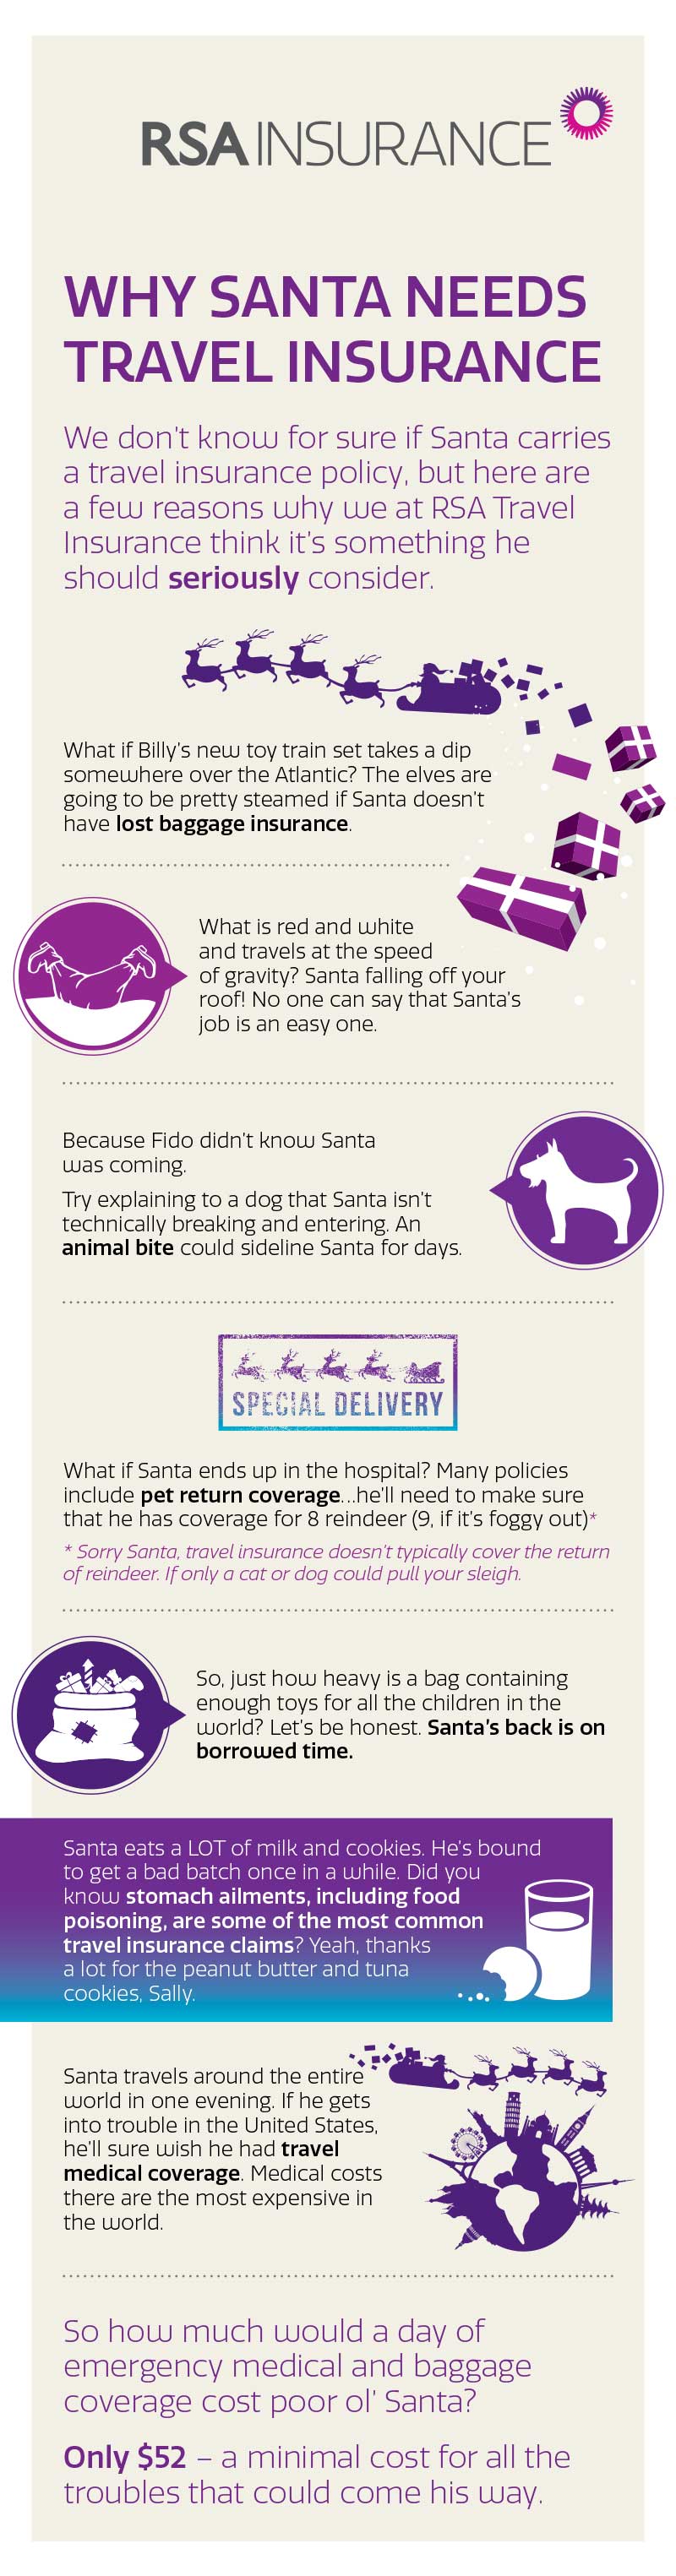 Infographic-Why Santa needs travel insurance